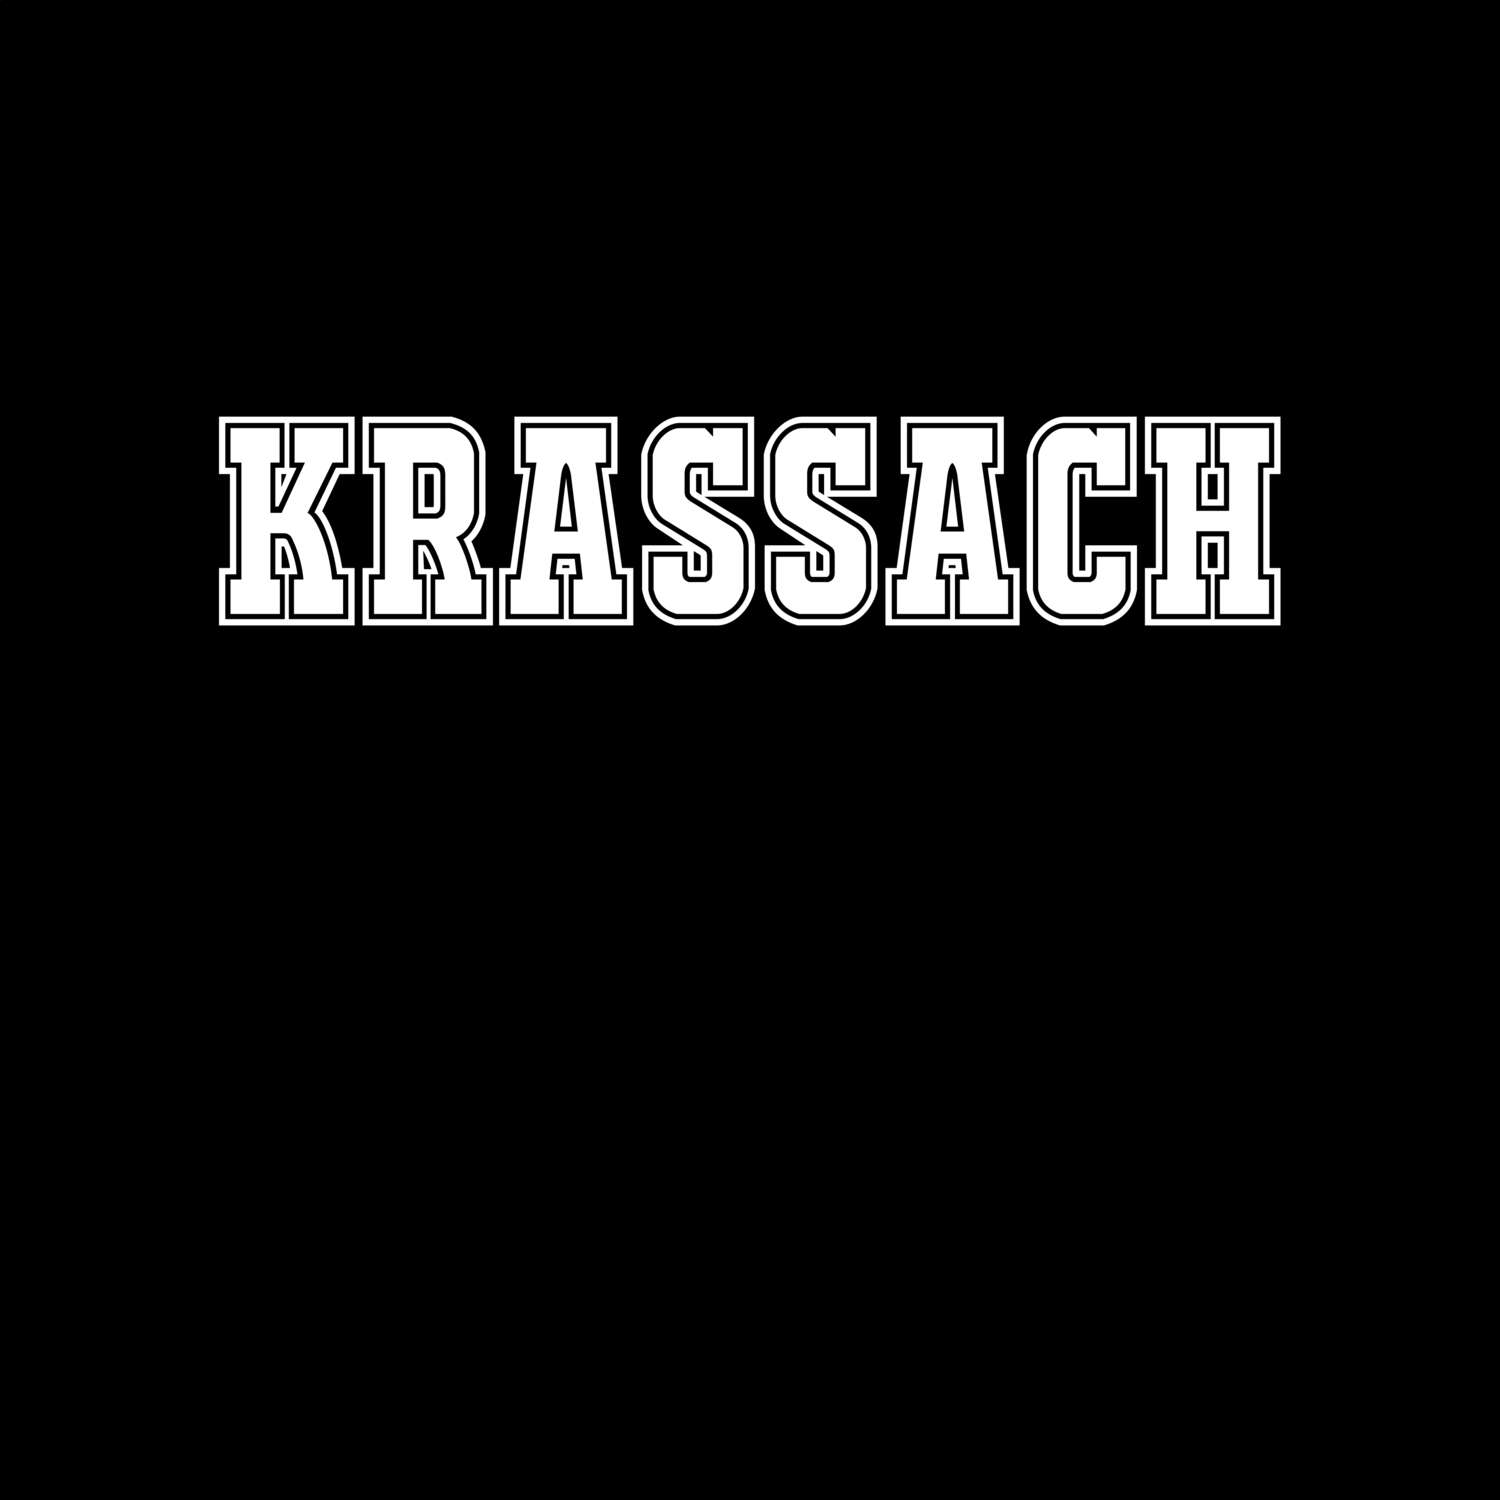 Krassach T-Shirt »Classic«